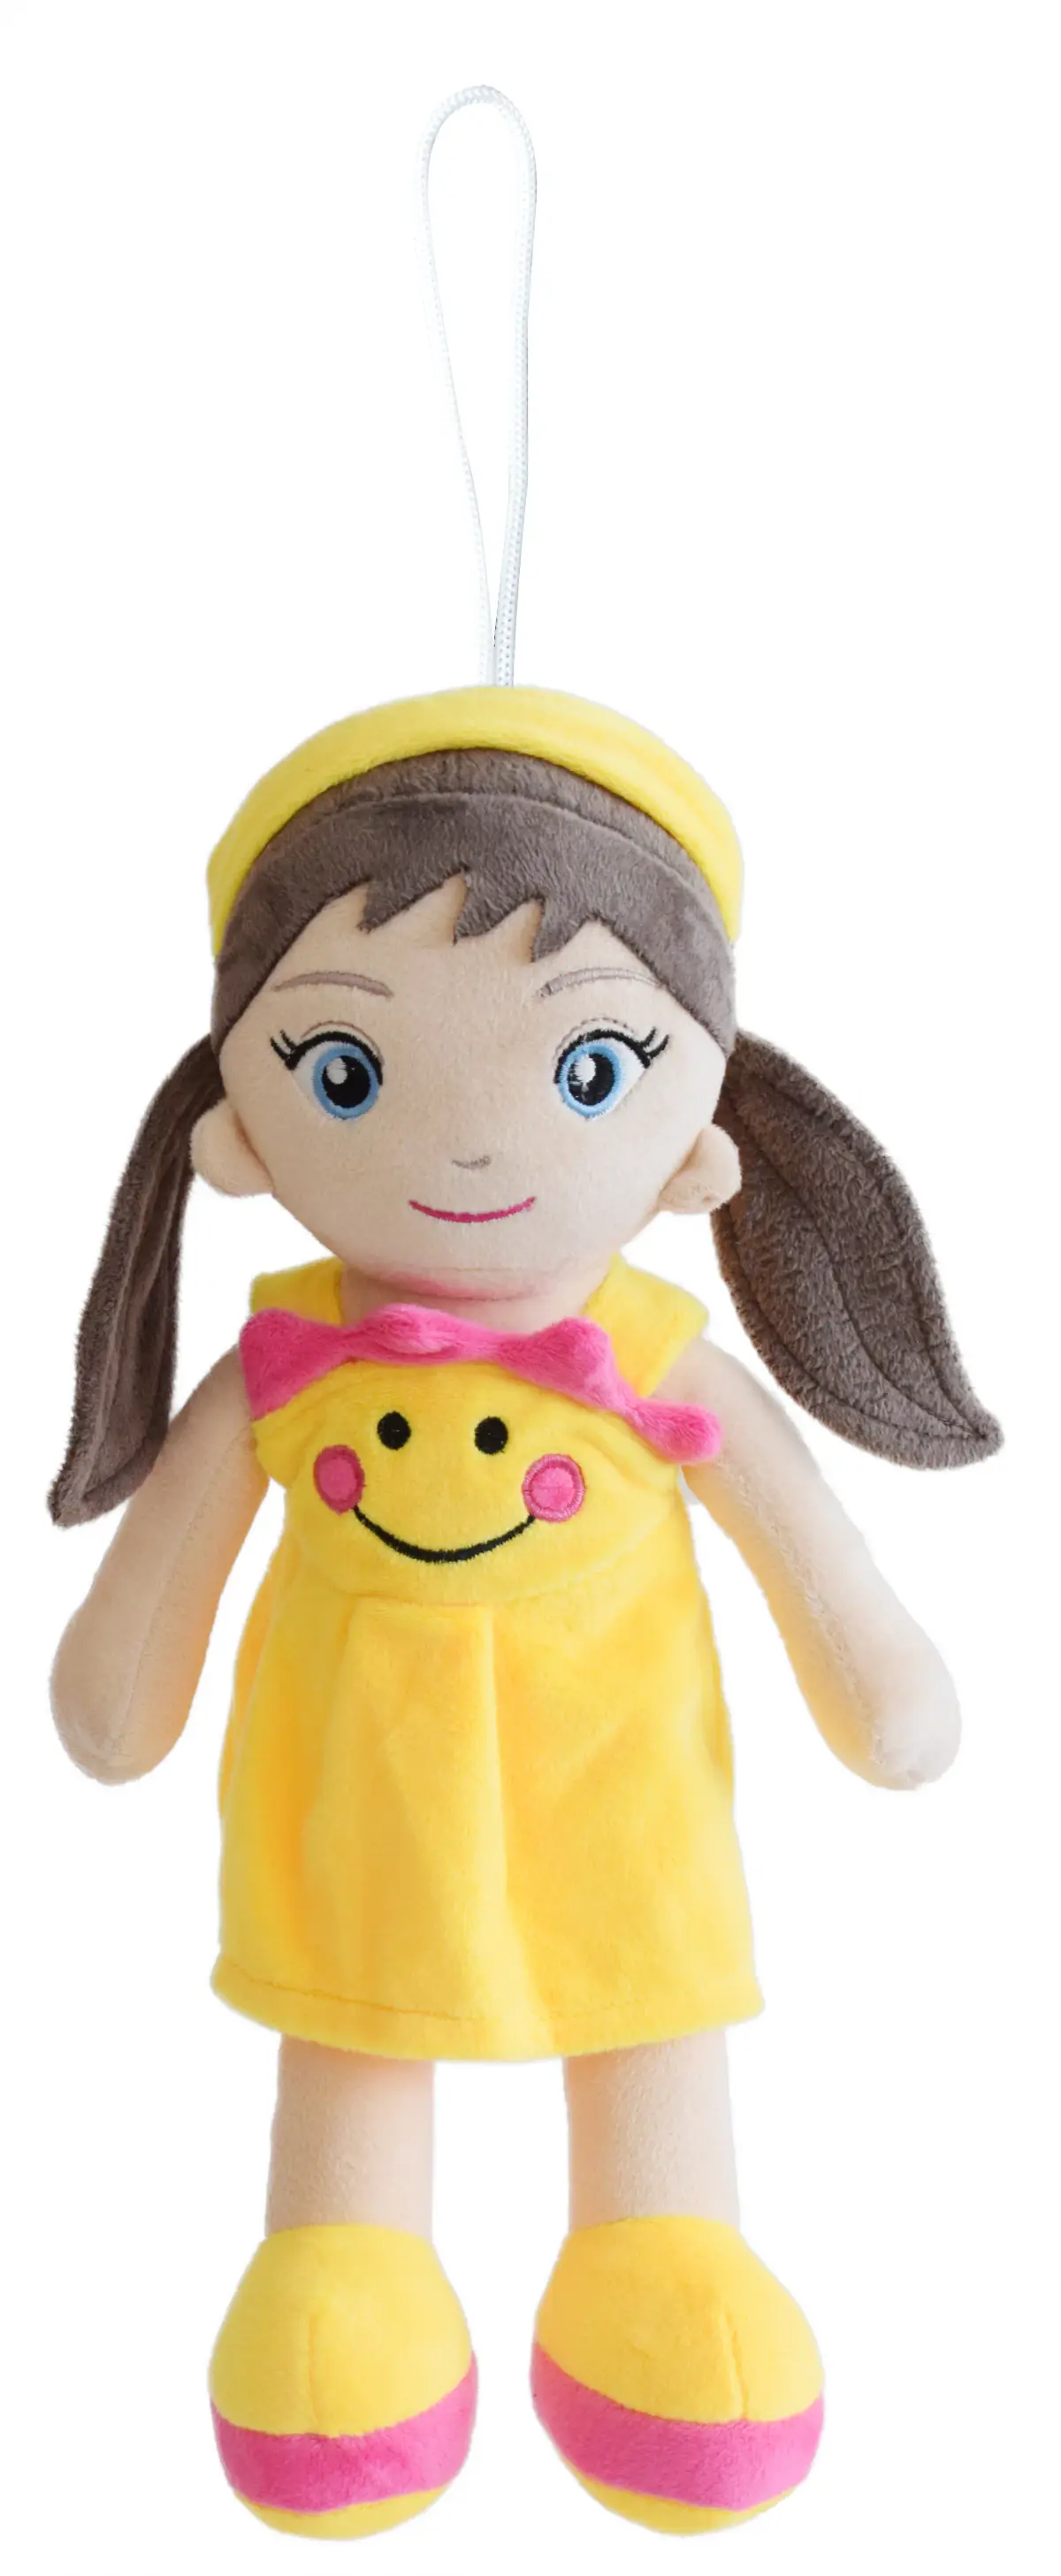 Plush Cute Super Soft Toy Huggable Doll By Mirada, 38Cm, Yellow